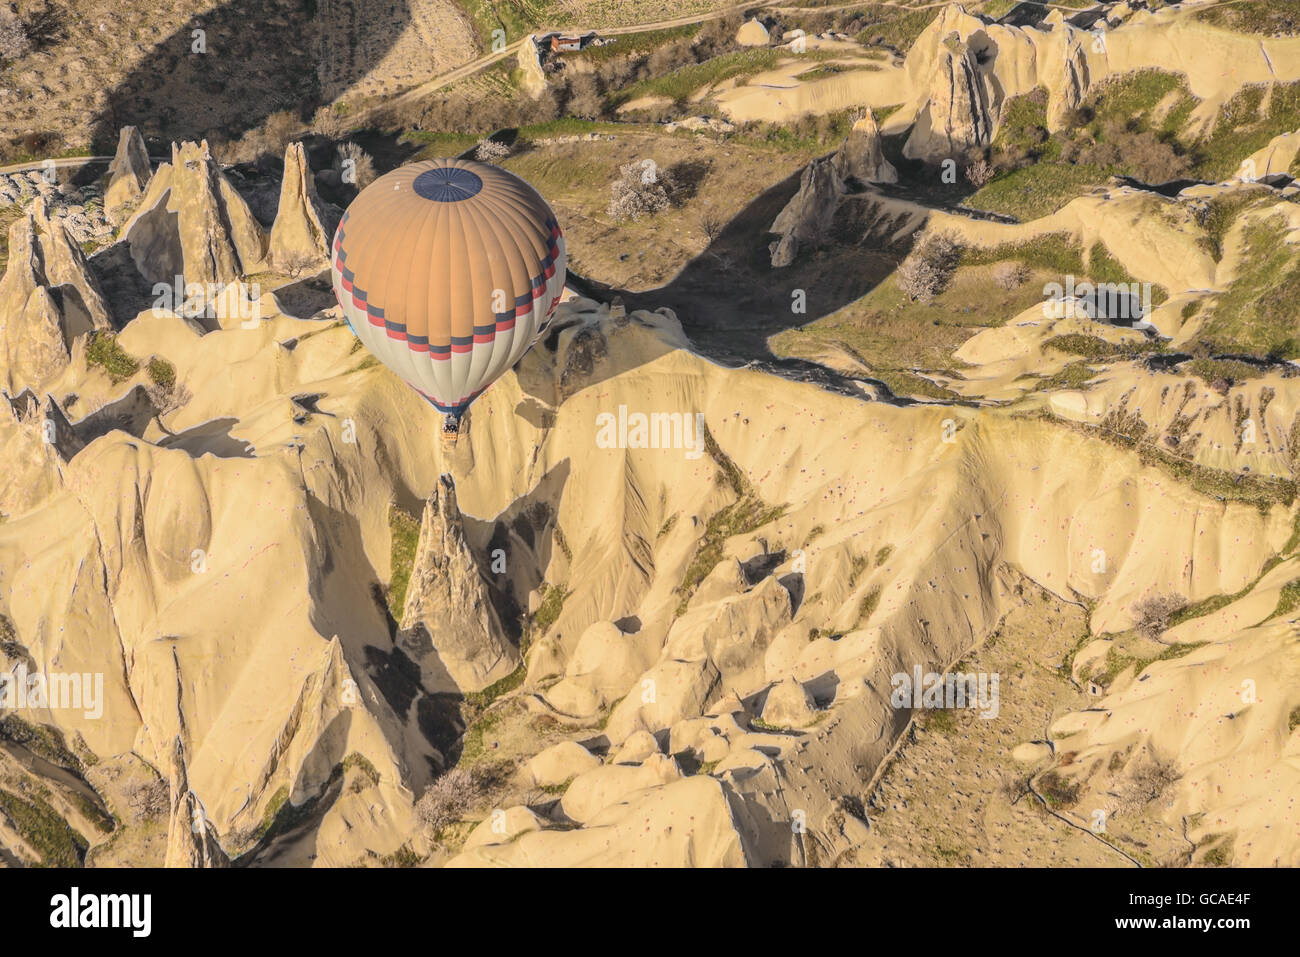 Balloon ride over the unique rock formations of Cappadocia, Anatolia, Turkey Stock Photo